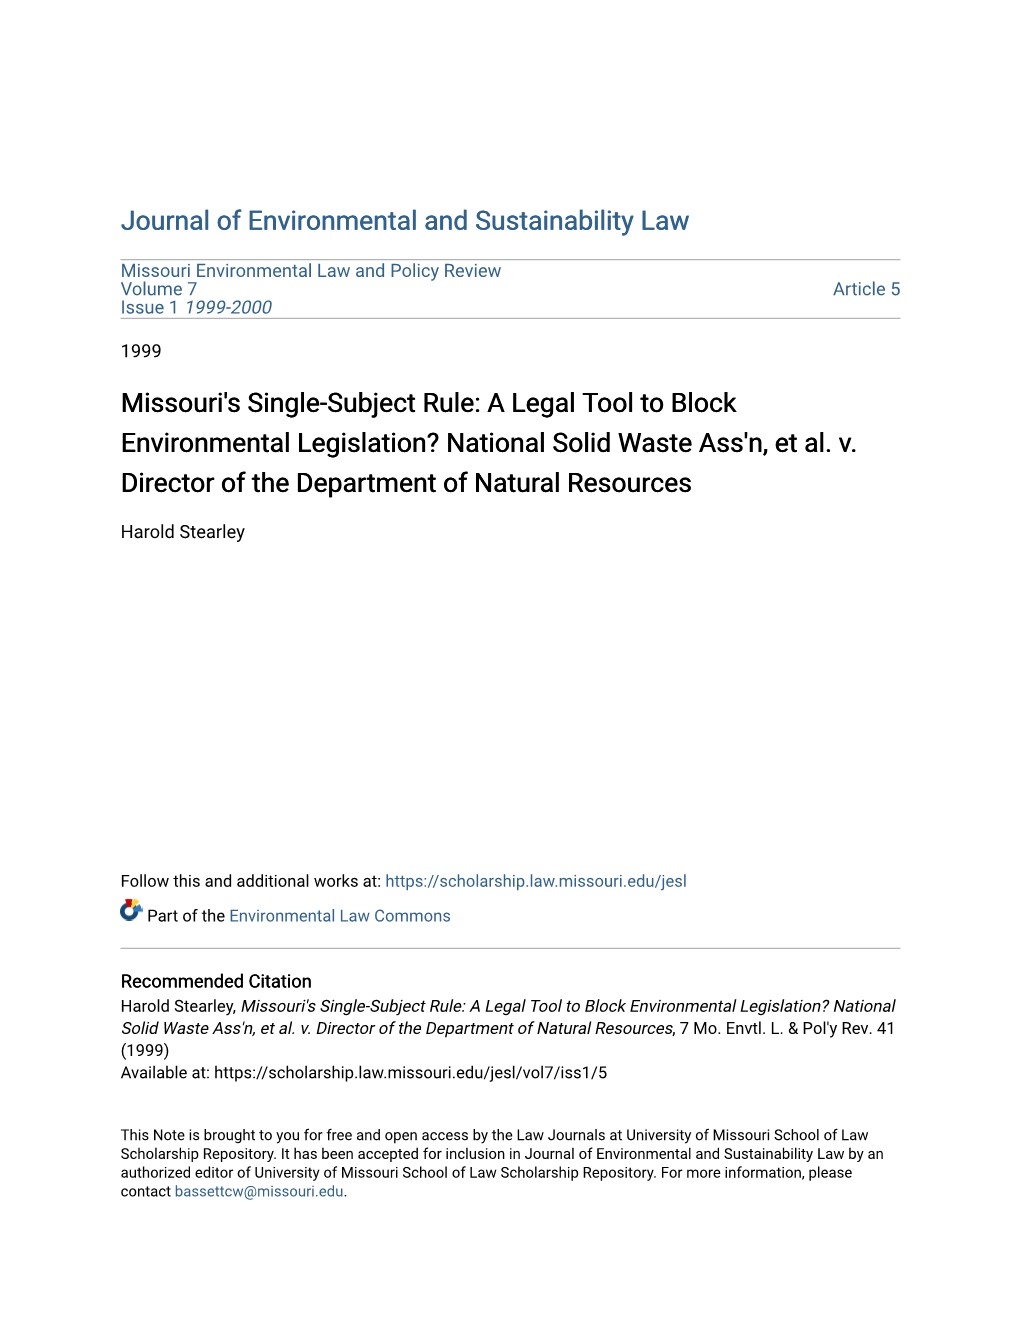 Missouri's Single-Subject Rule: a Legal Tool to Block Environmental Legislation? National Solid Waste Ass'n, Et Al